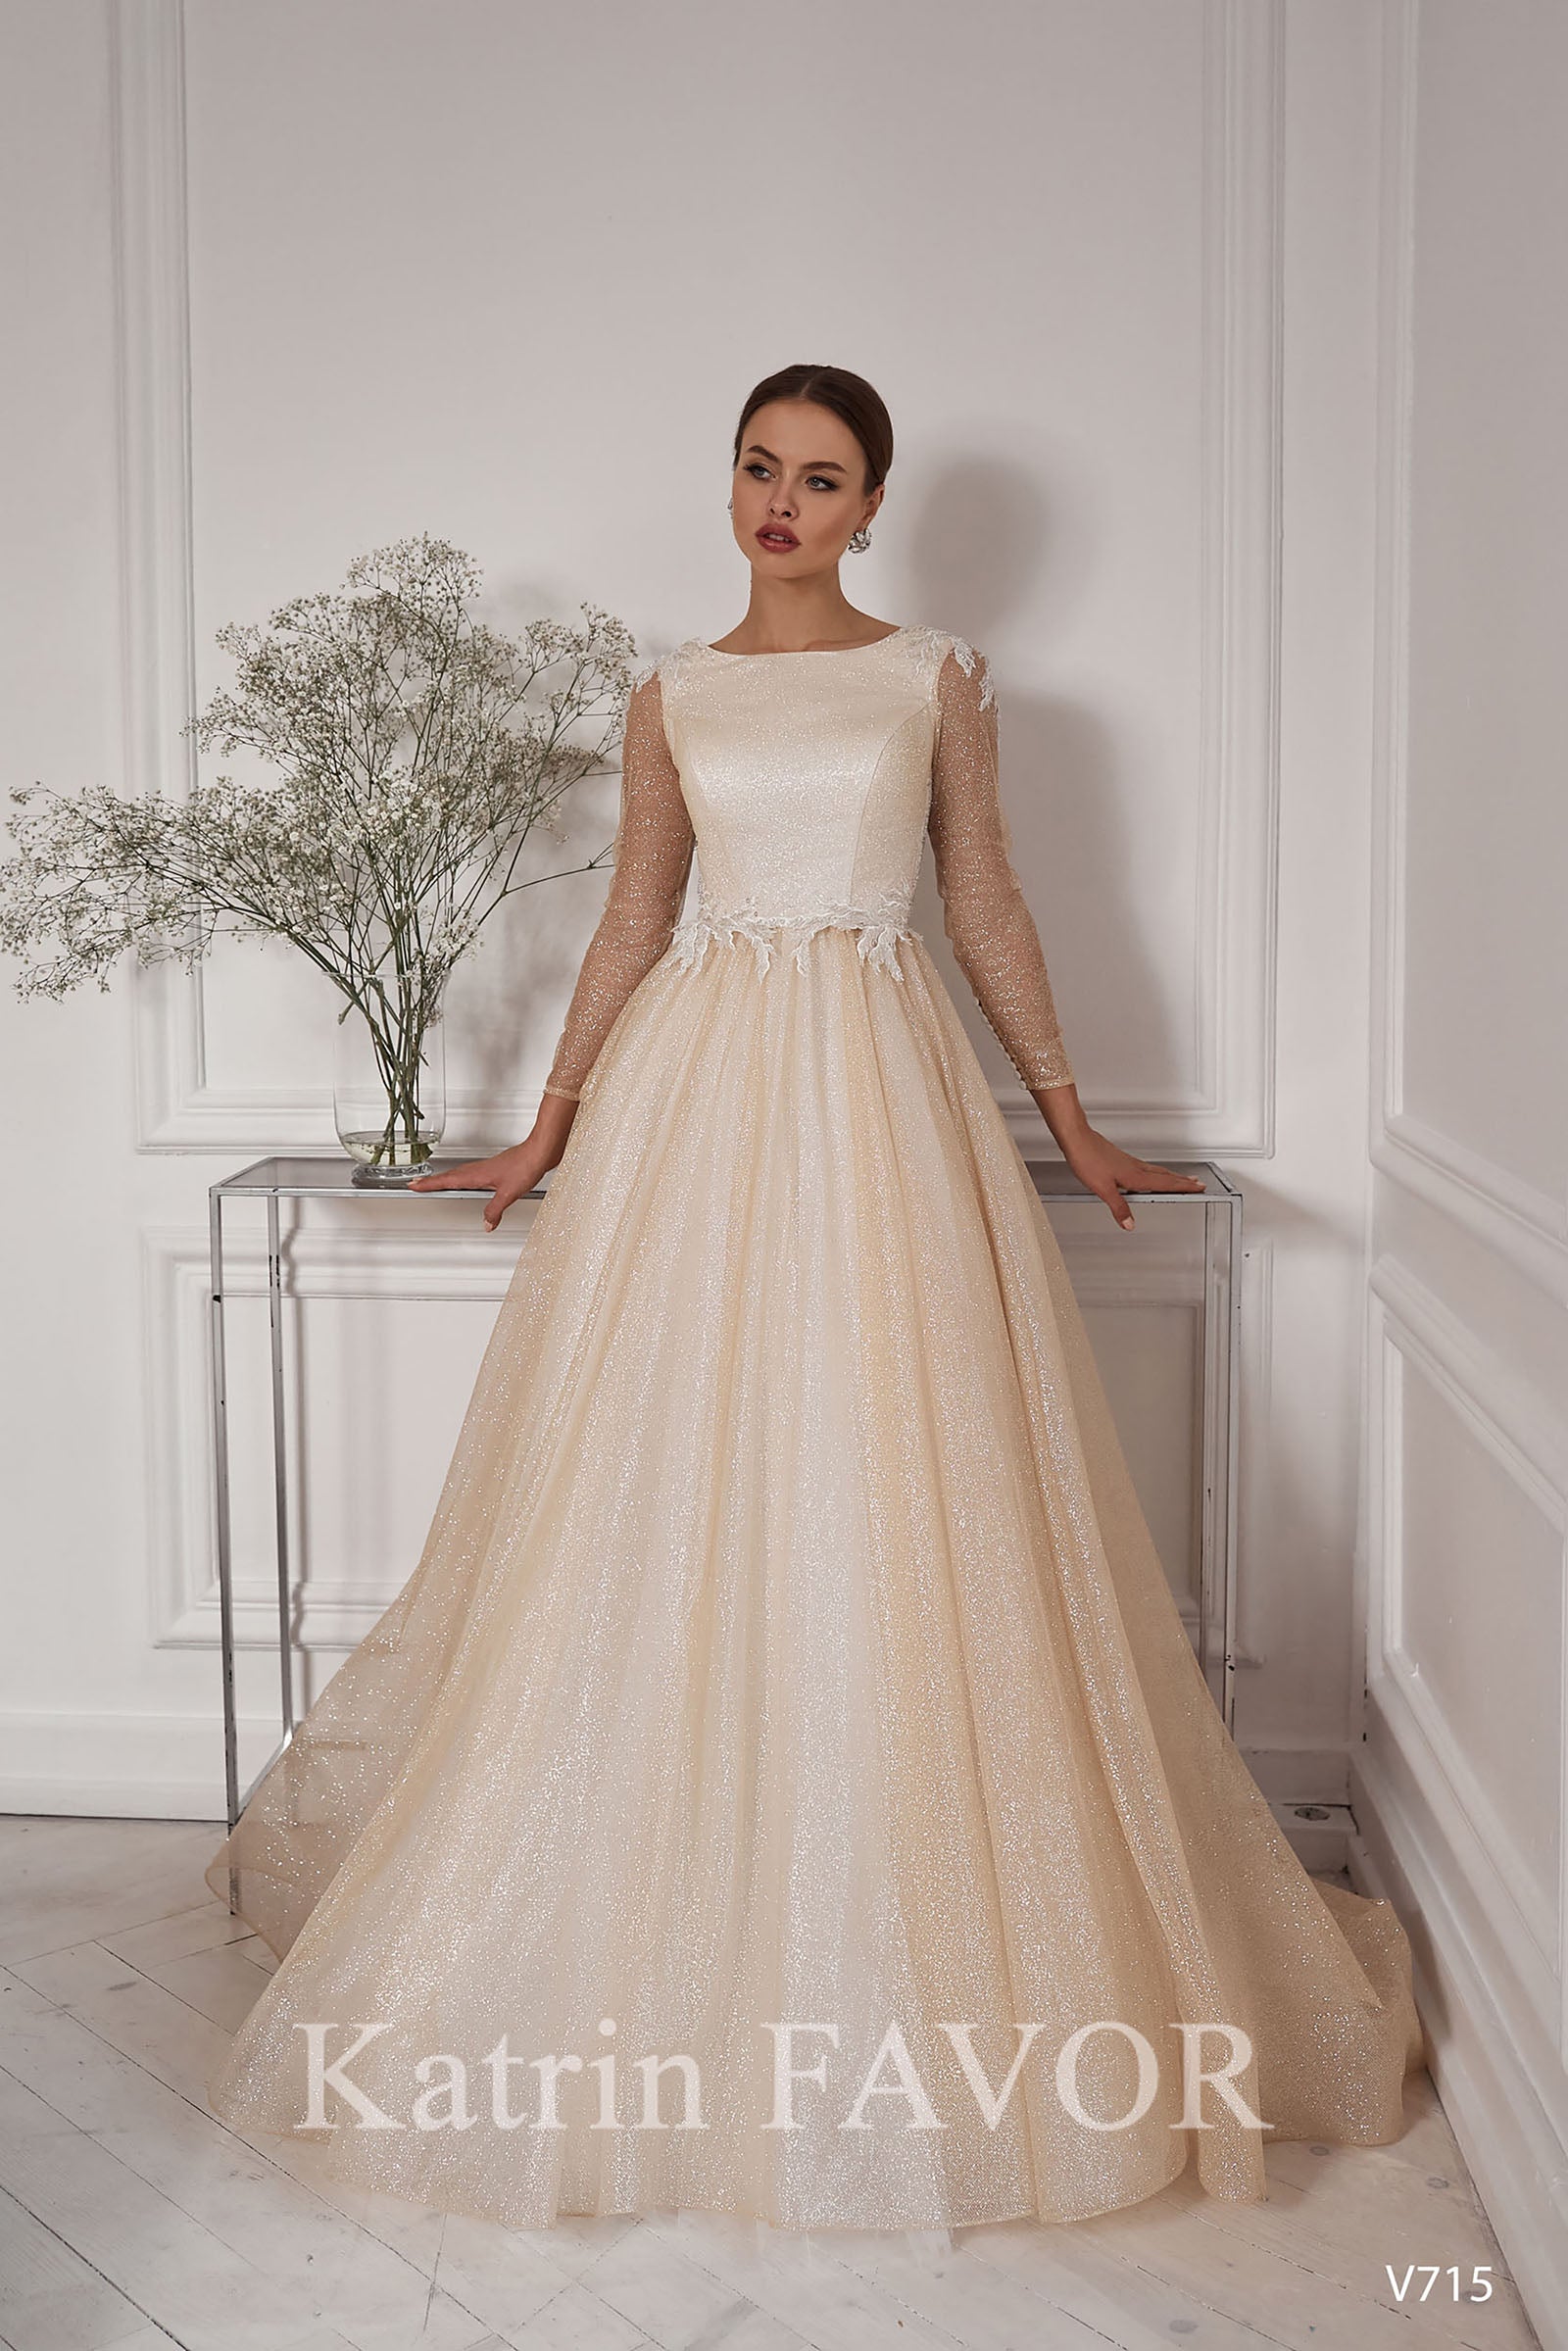 Katrin Favor - Sparkle blush long open back wedding dress